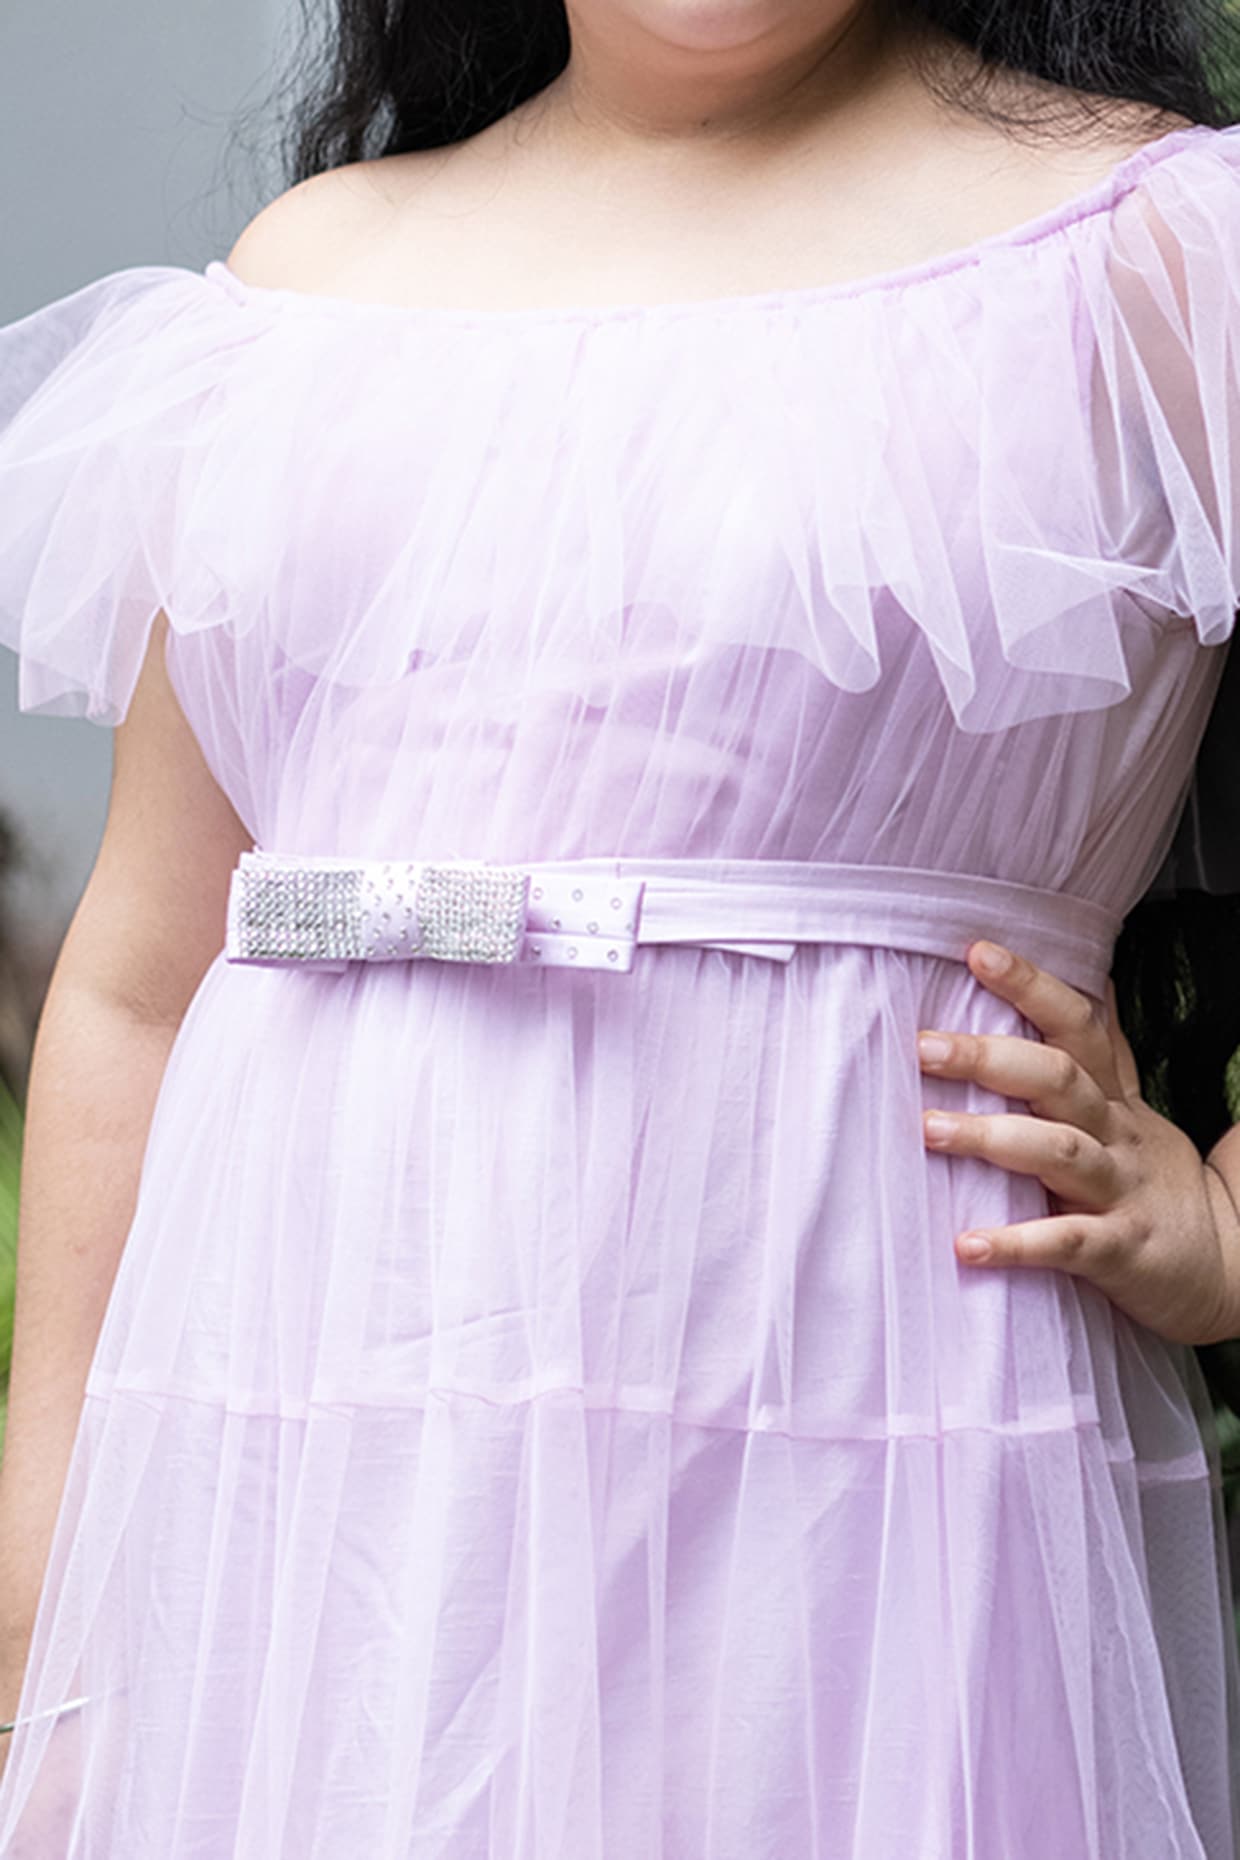 Pakistani Indian Wedding Party Wear Designer Maxi Dress.Color Peach Brand  New | eBay